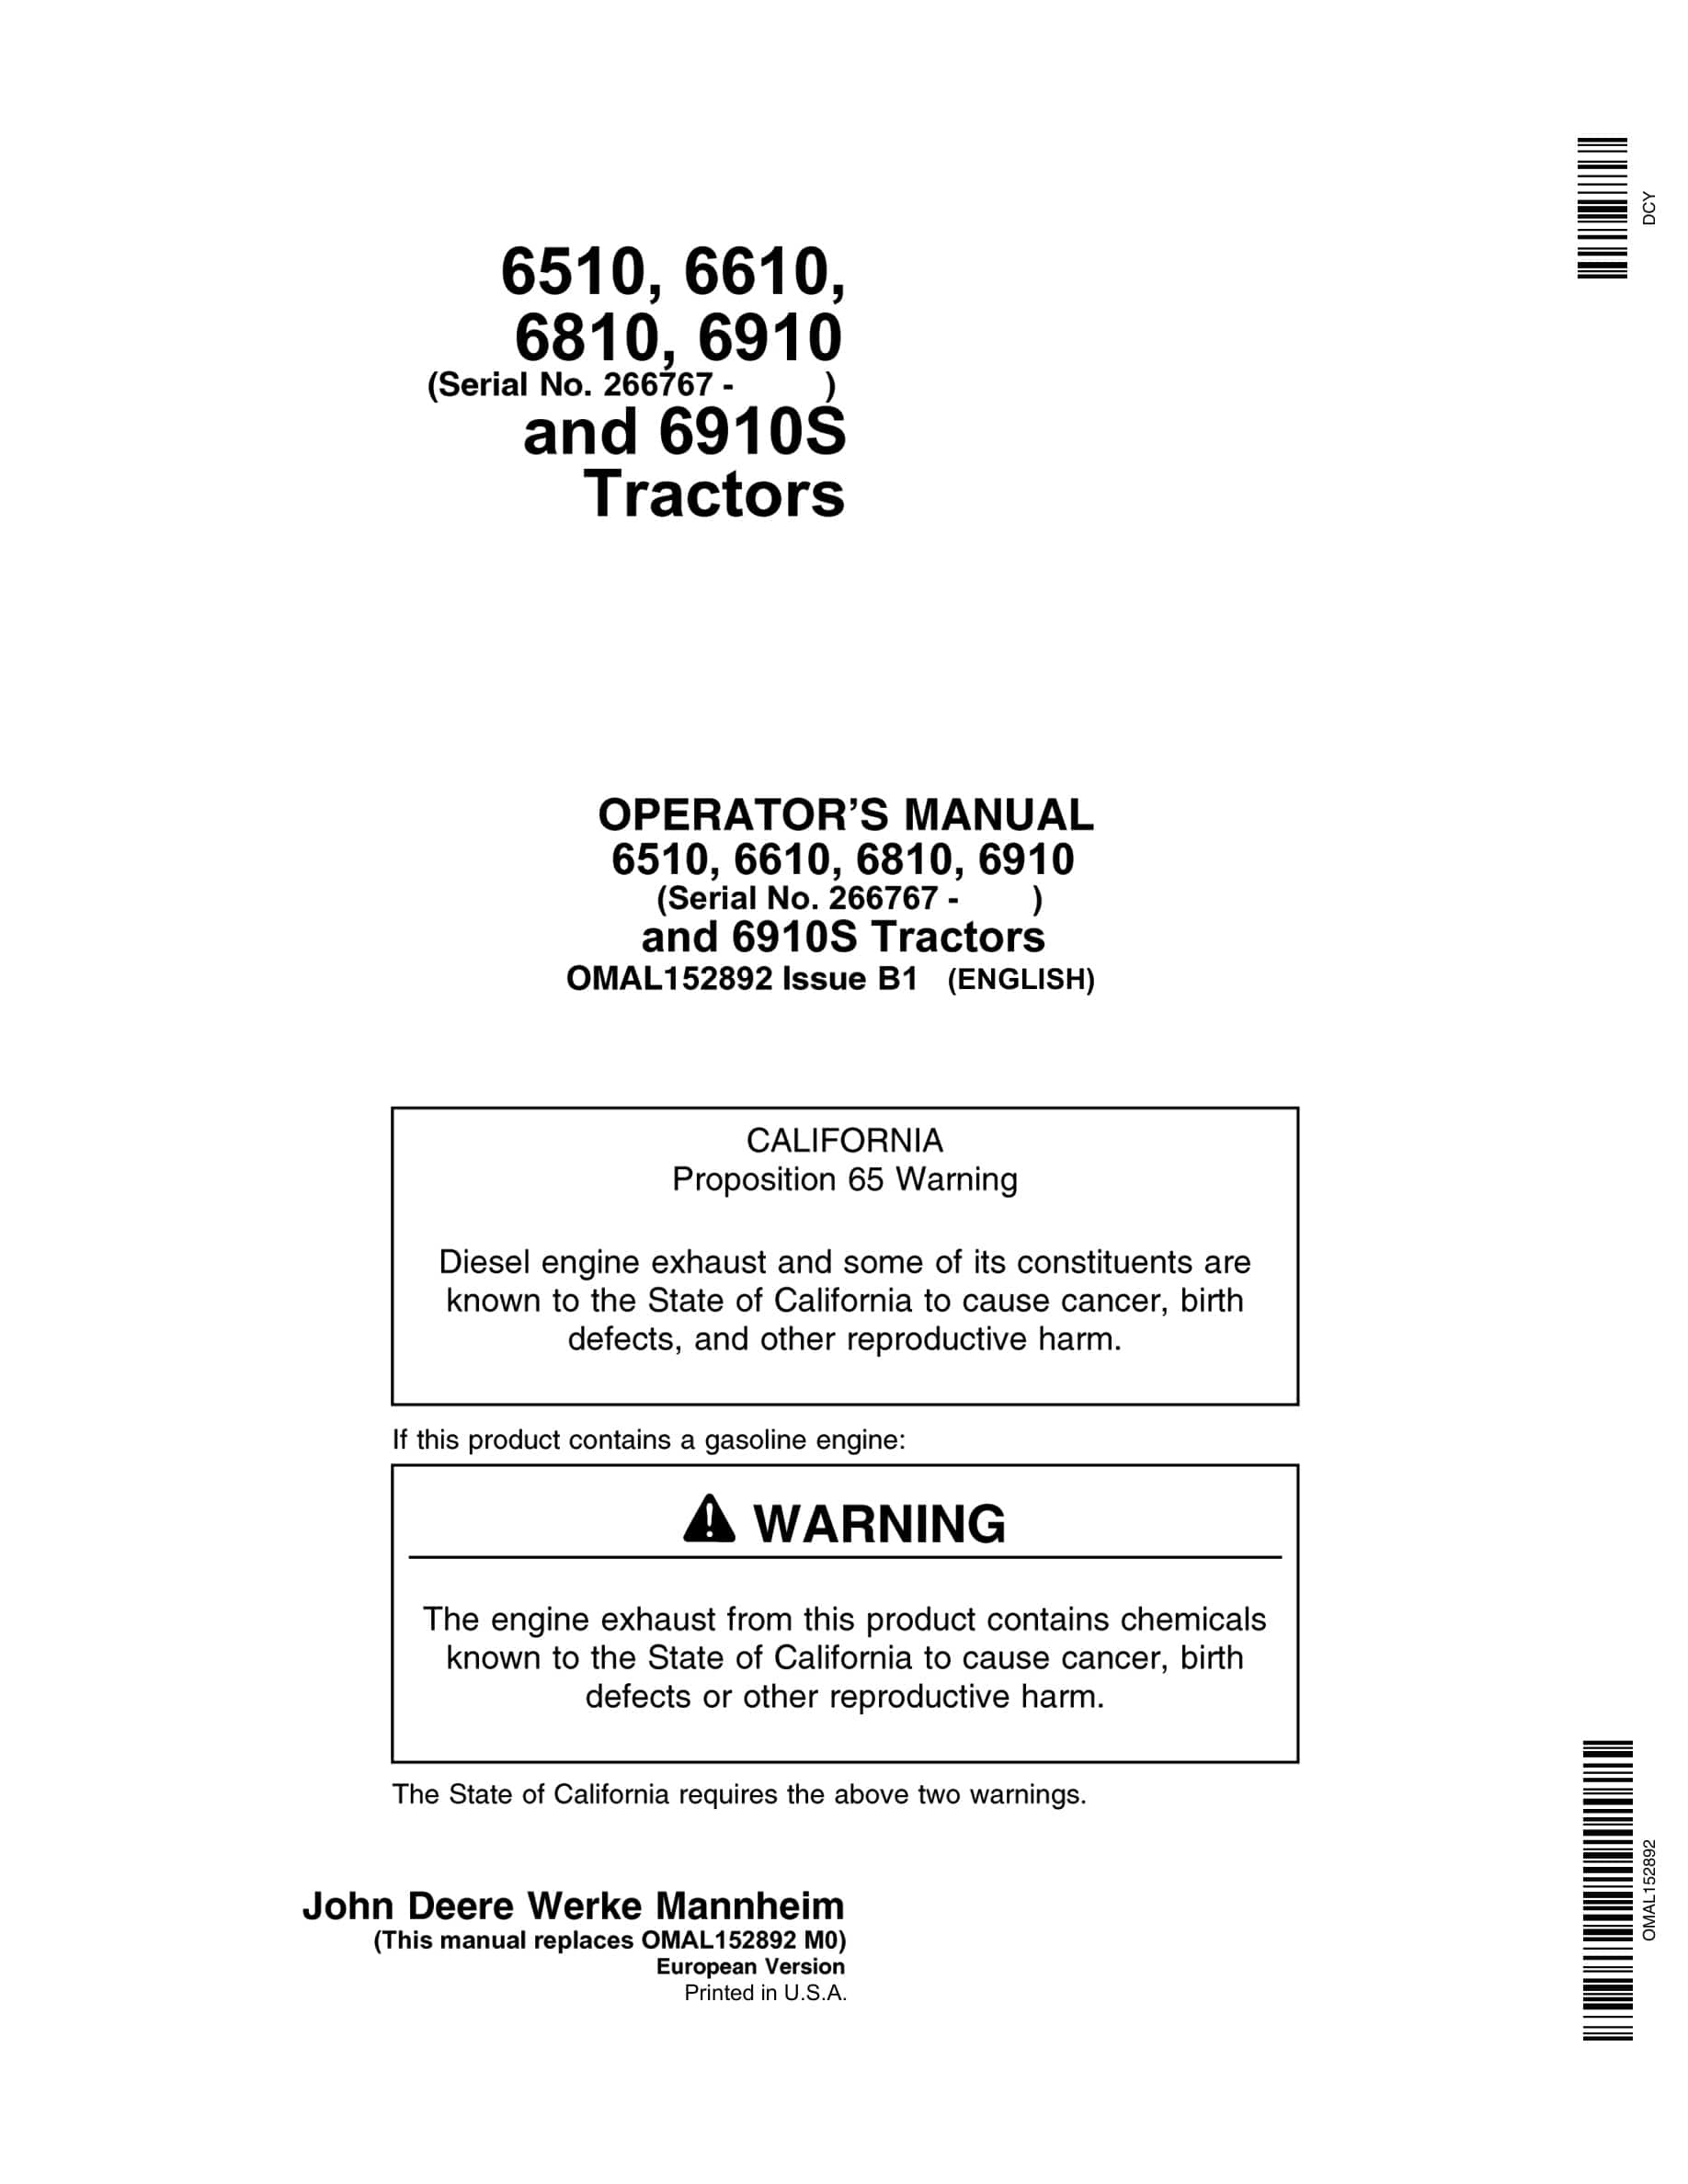 John Deere 6510 6610 6810 6810 6910s Tractors Operator Manuals OMAL152892-1